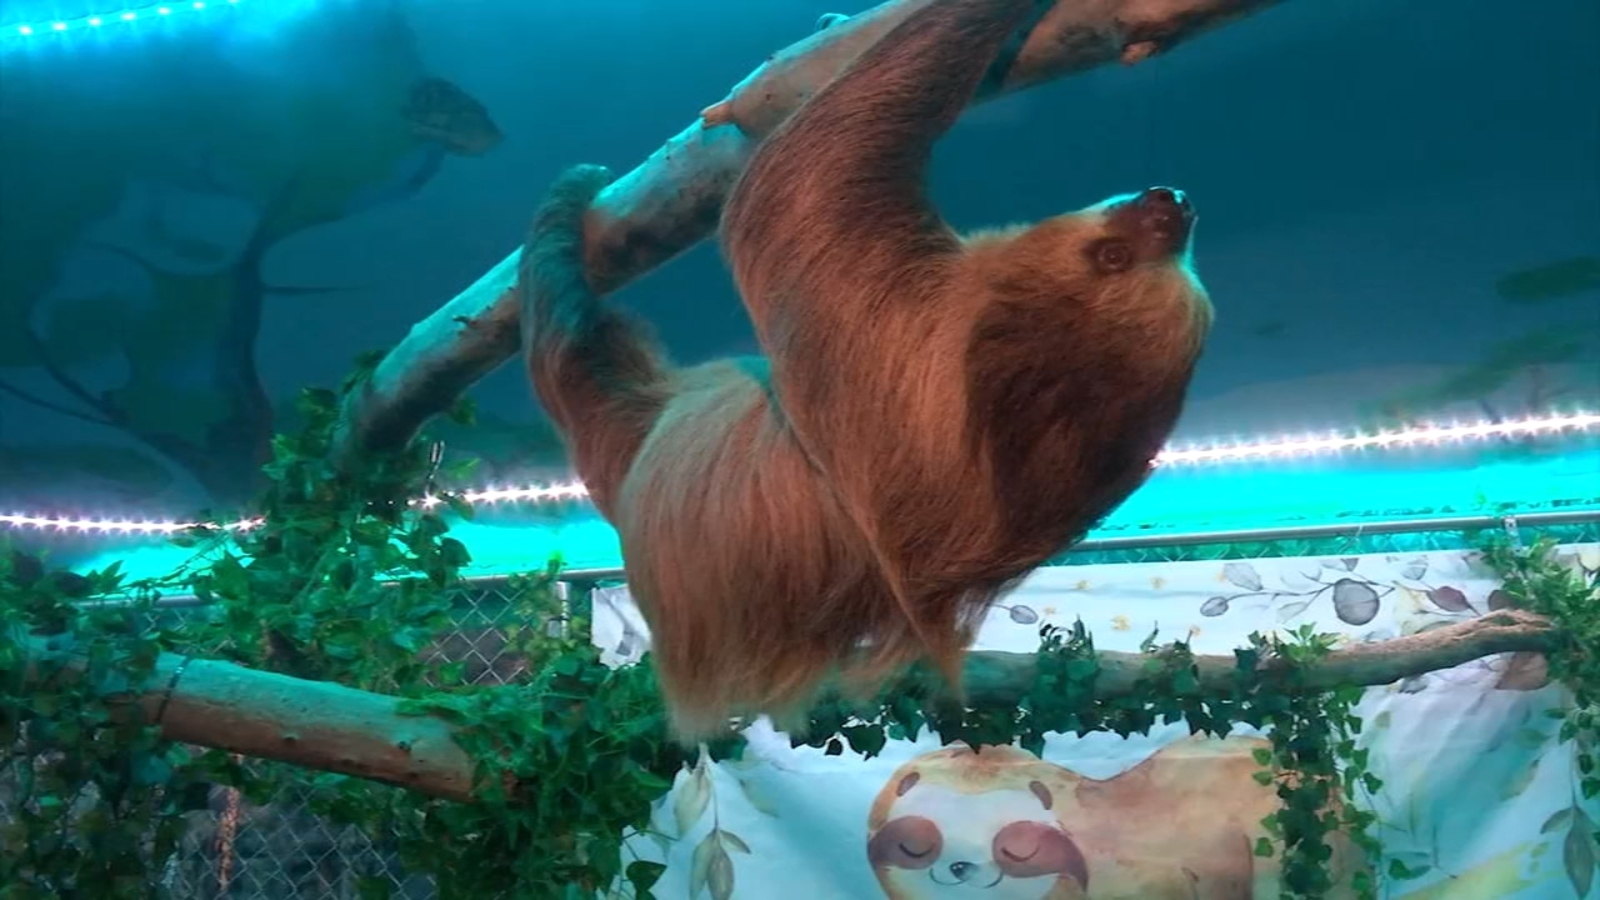 Animal activists fight to shut down sloth exhibit in Hauppauge New York